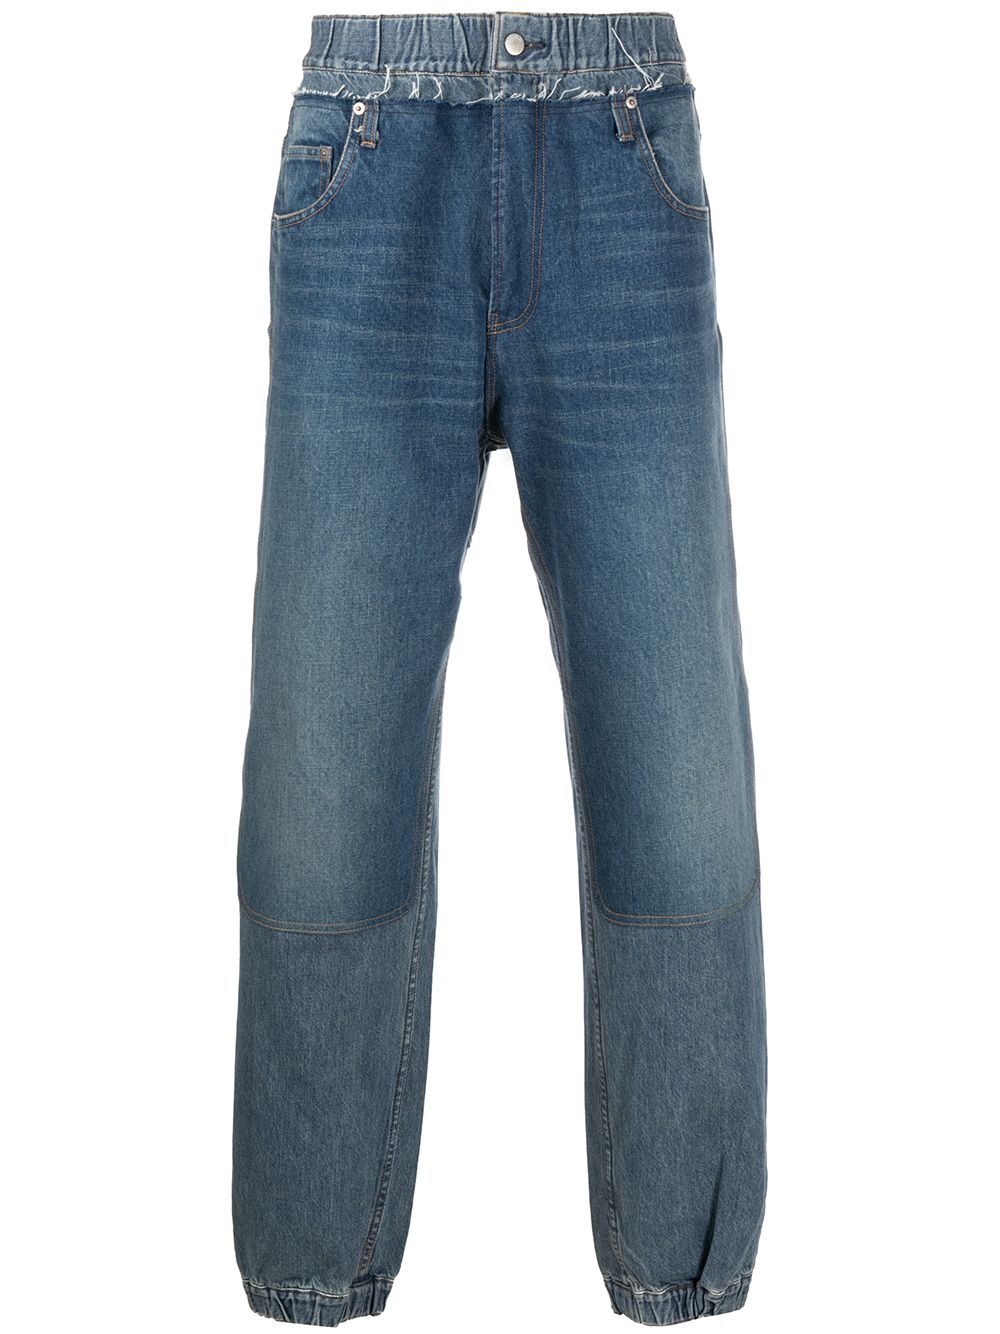 AMBUSH джинсы Hybrid с эластичными манжетами